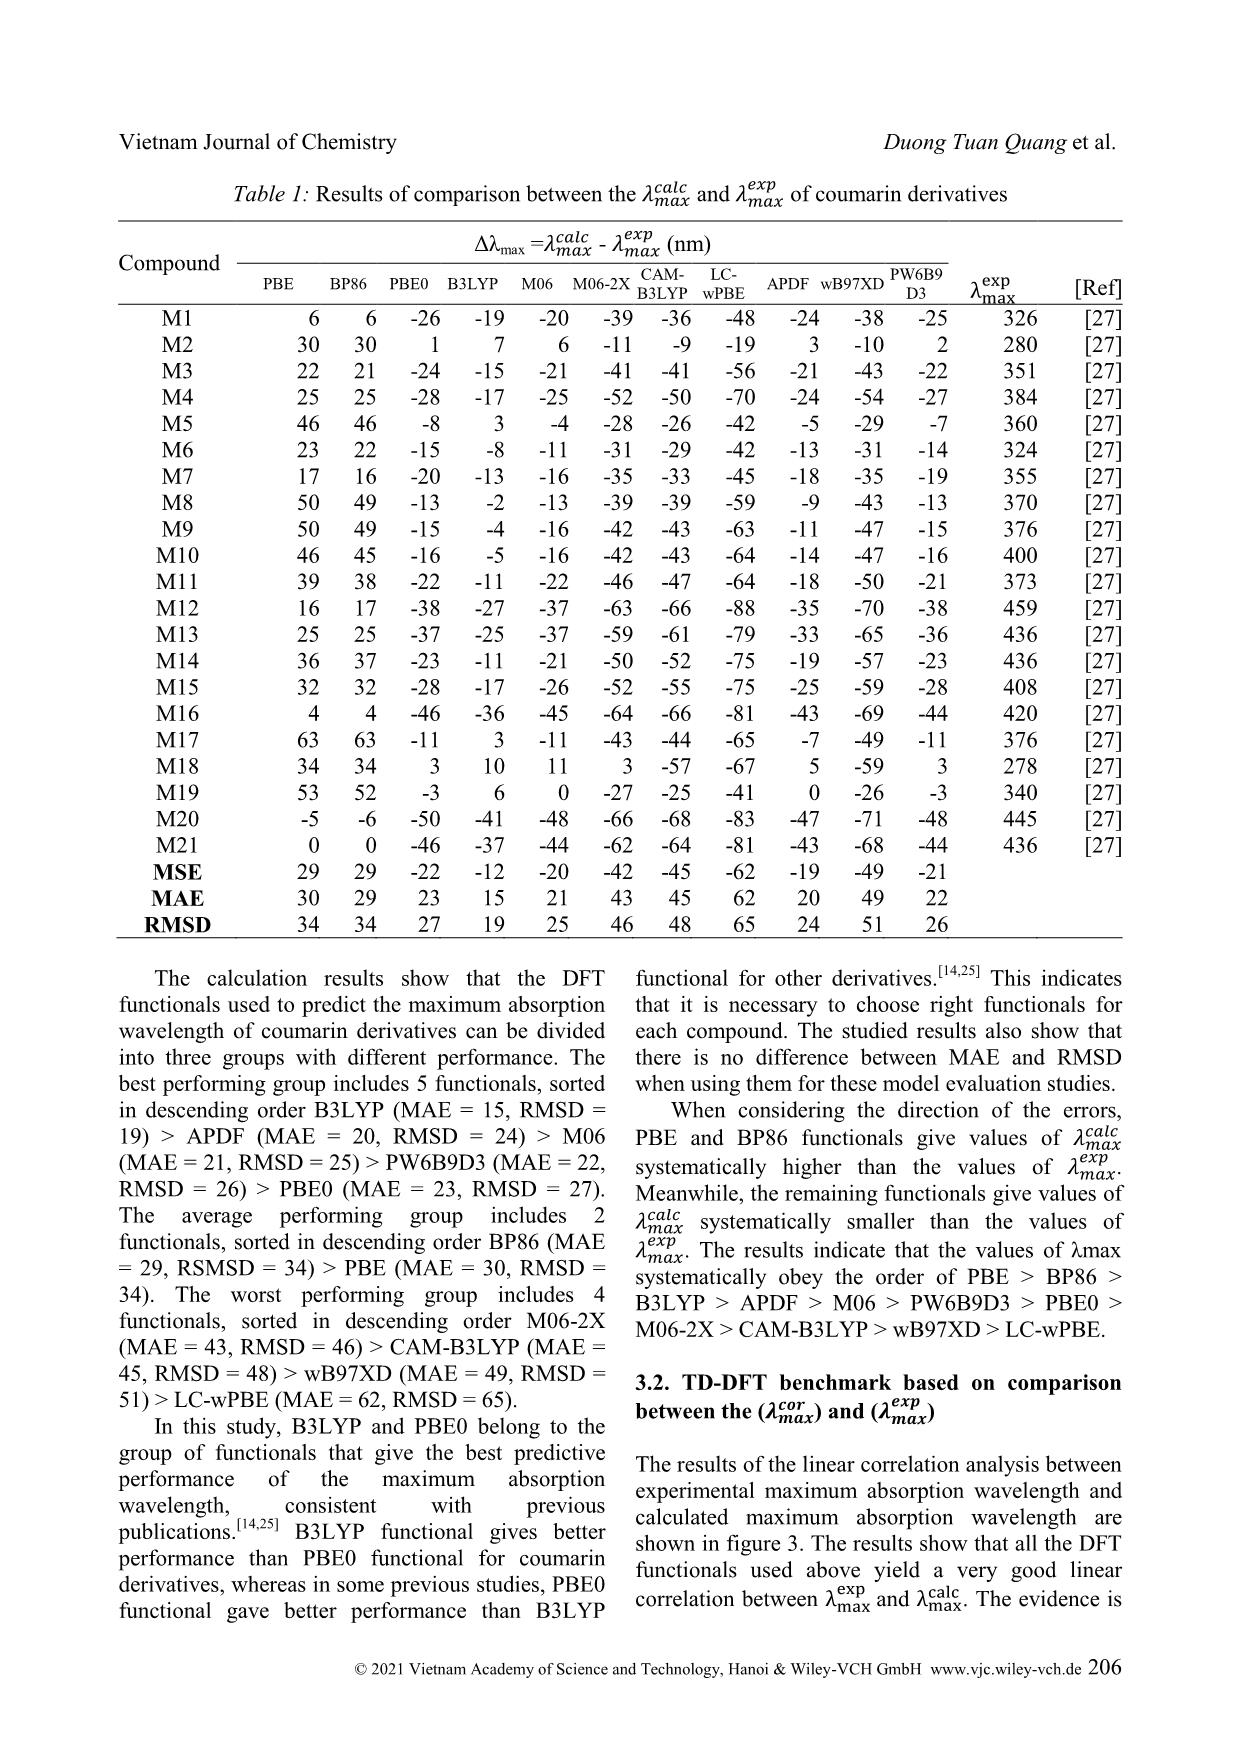 TD-DFT benchmark for UV-Vis spectra of coumarin derivatives trang 4